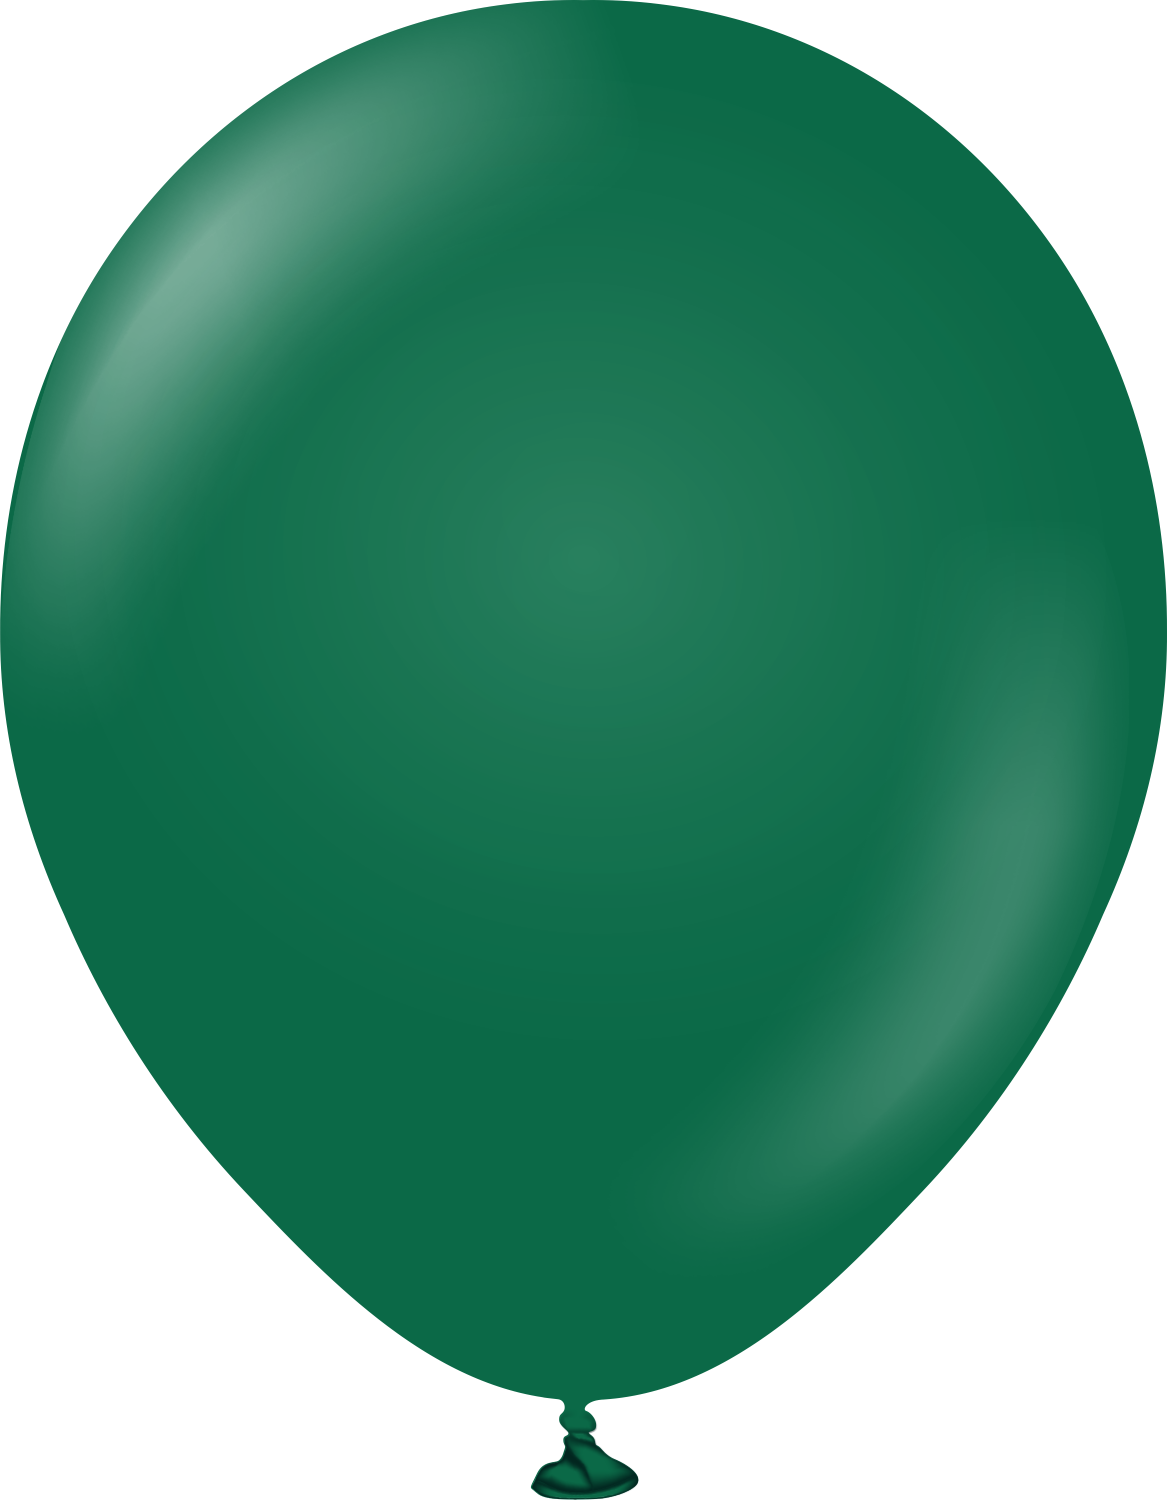 Kalisan Standard Dark Green